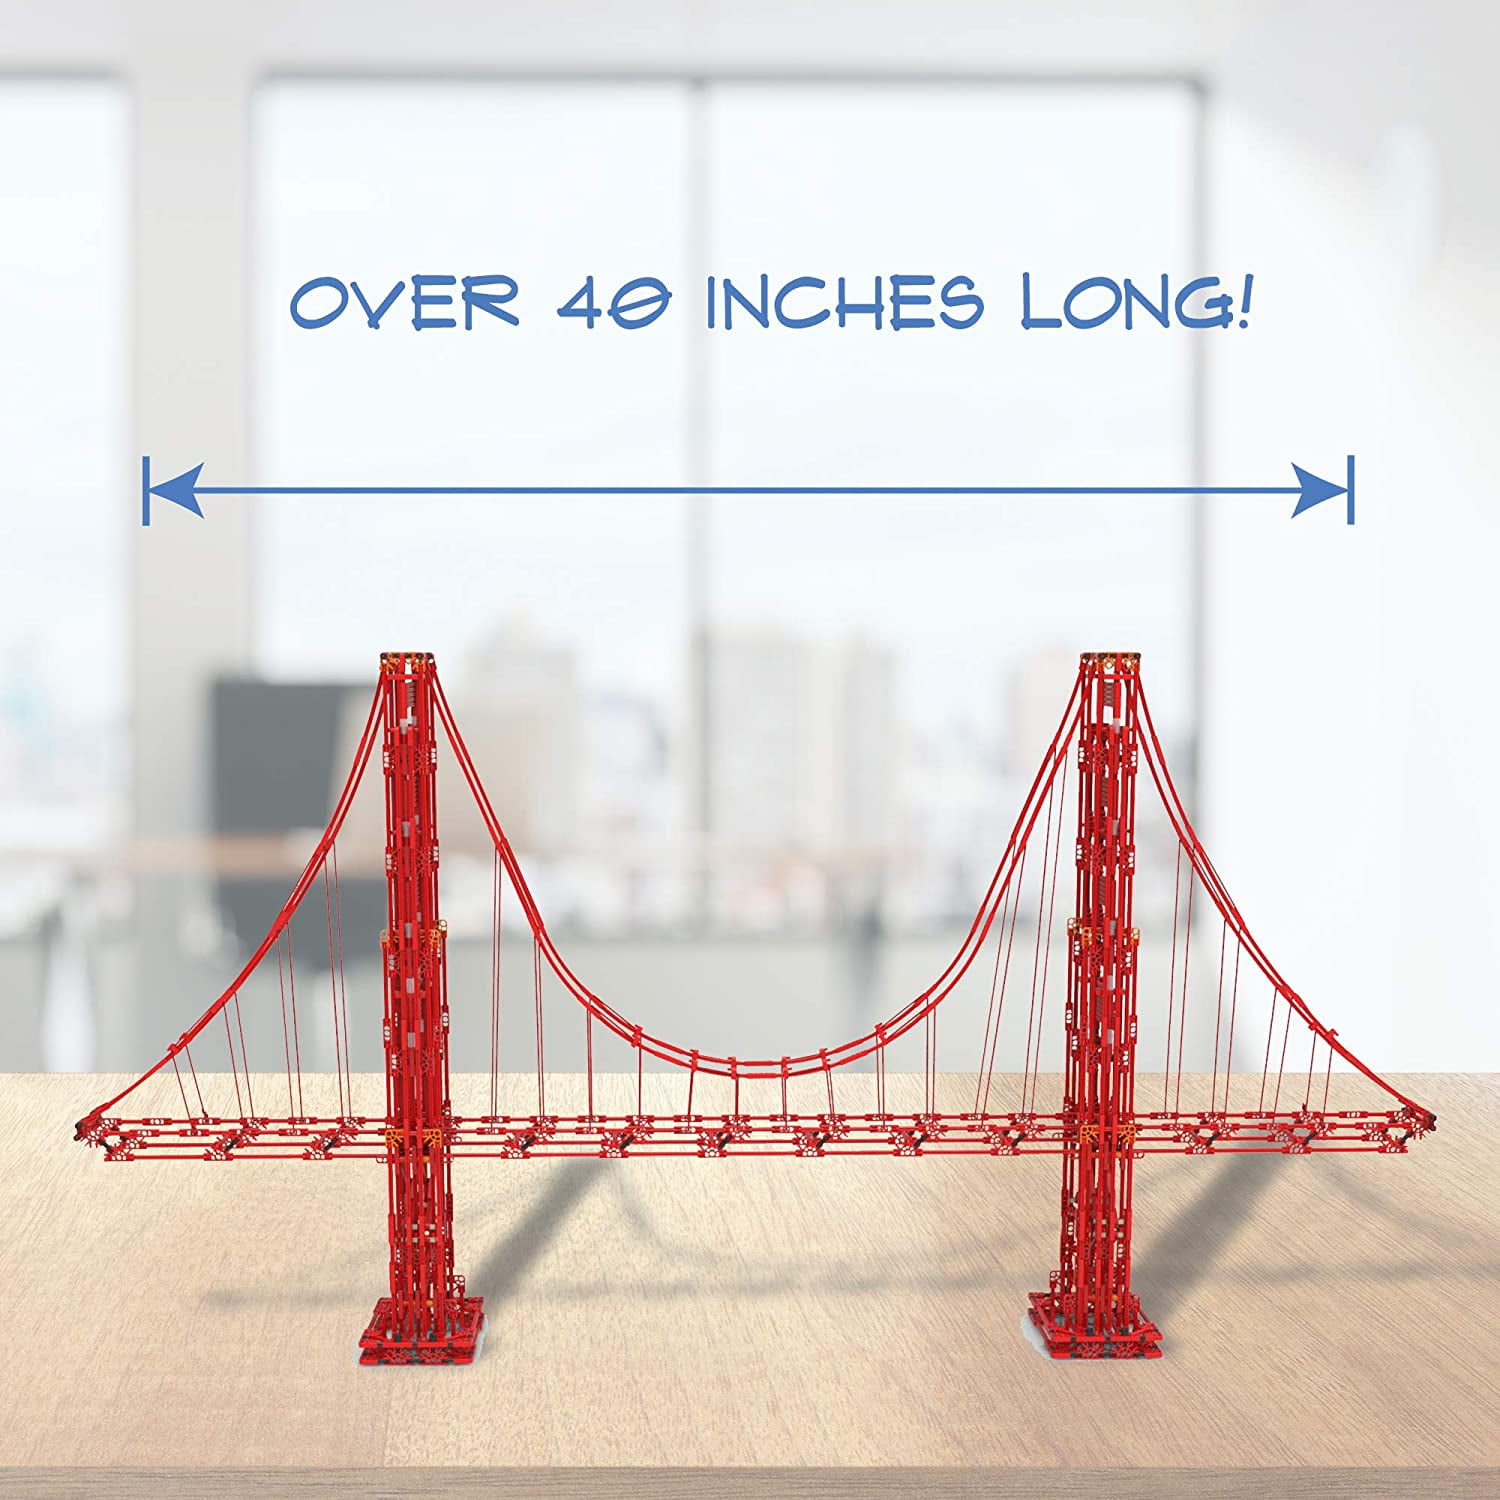 Build IT Big Over 3 Feet Long - K'NEX Architecture: Golden Gate Bridge New Exclusive Collectible Building Set for Adults & Kids 9+ 1,536 Pieces 